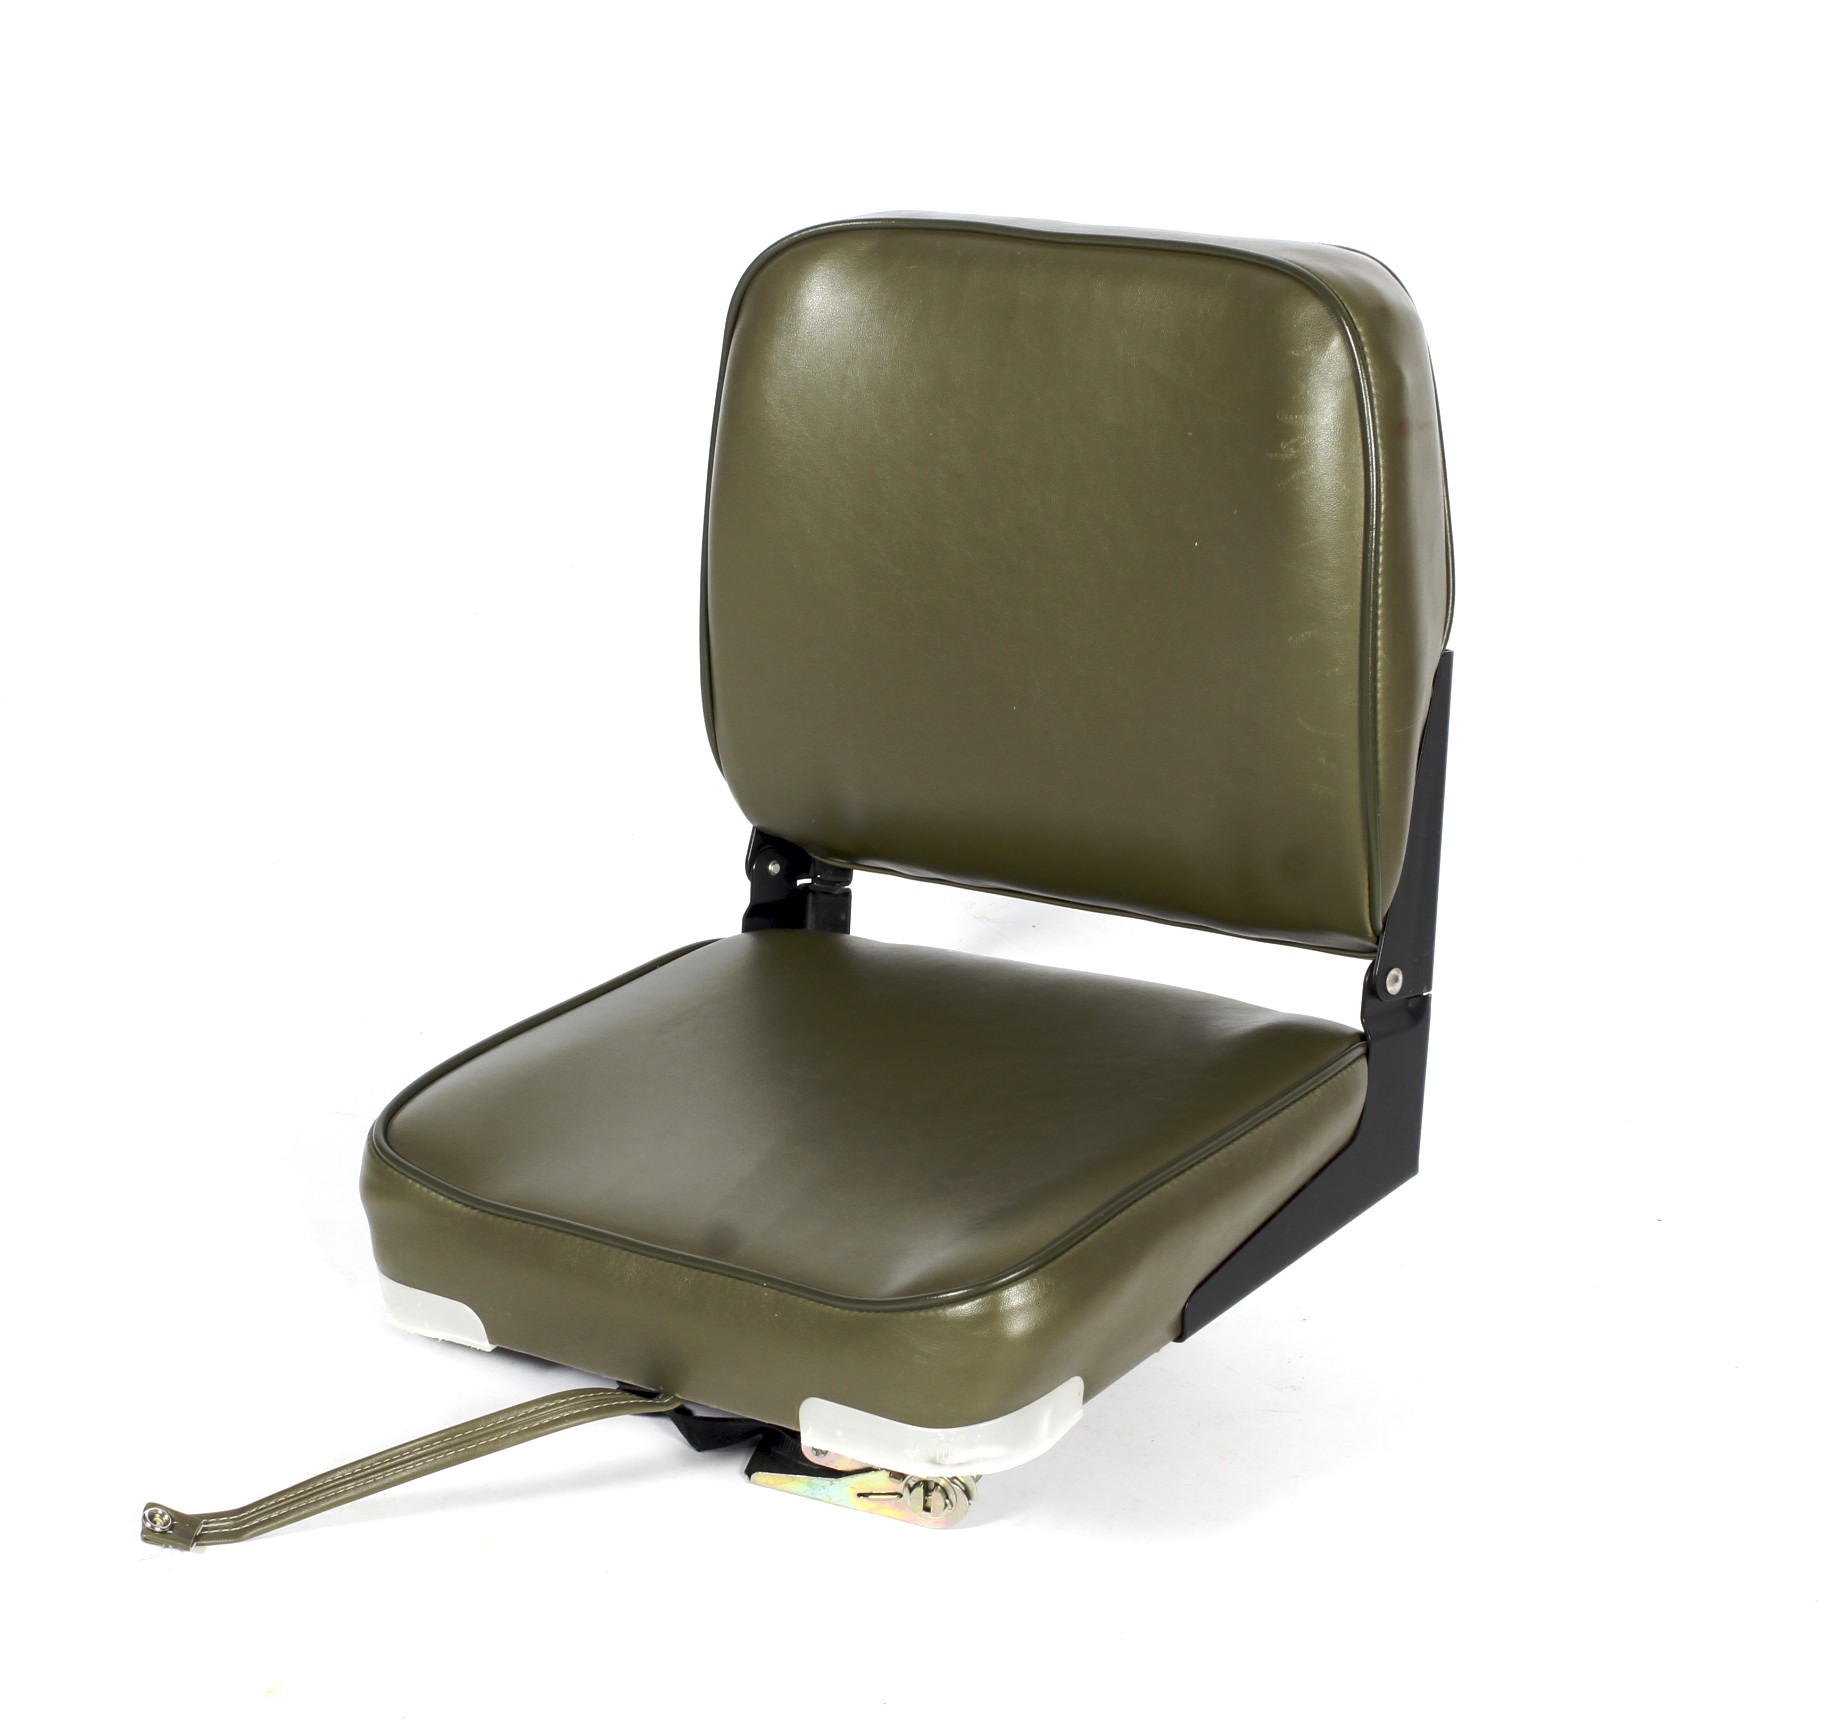 A swivel boat seat. Green upholstery on a metal base, 360 degree swivel, 40cm x 26cm when folded.